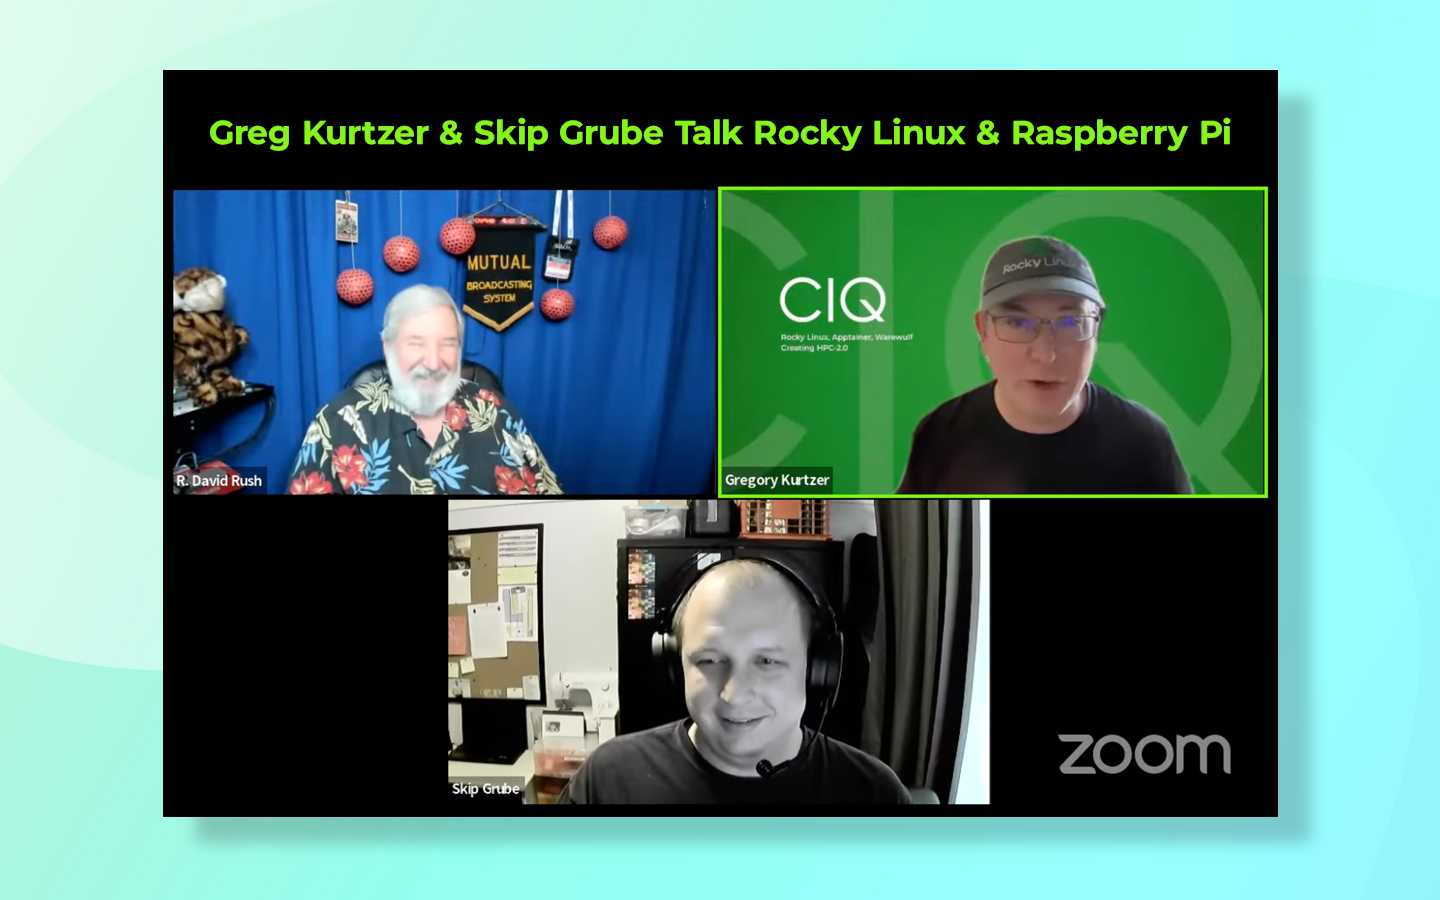 Greg Kurtzer and Skip Grube Talk Rocky Linux and Raspberry Pi